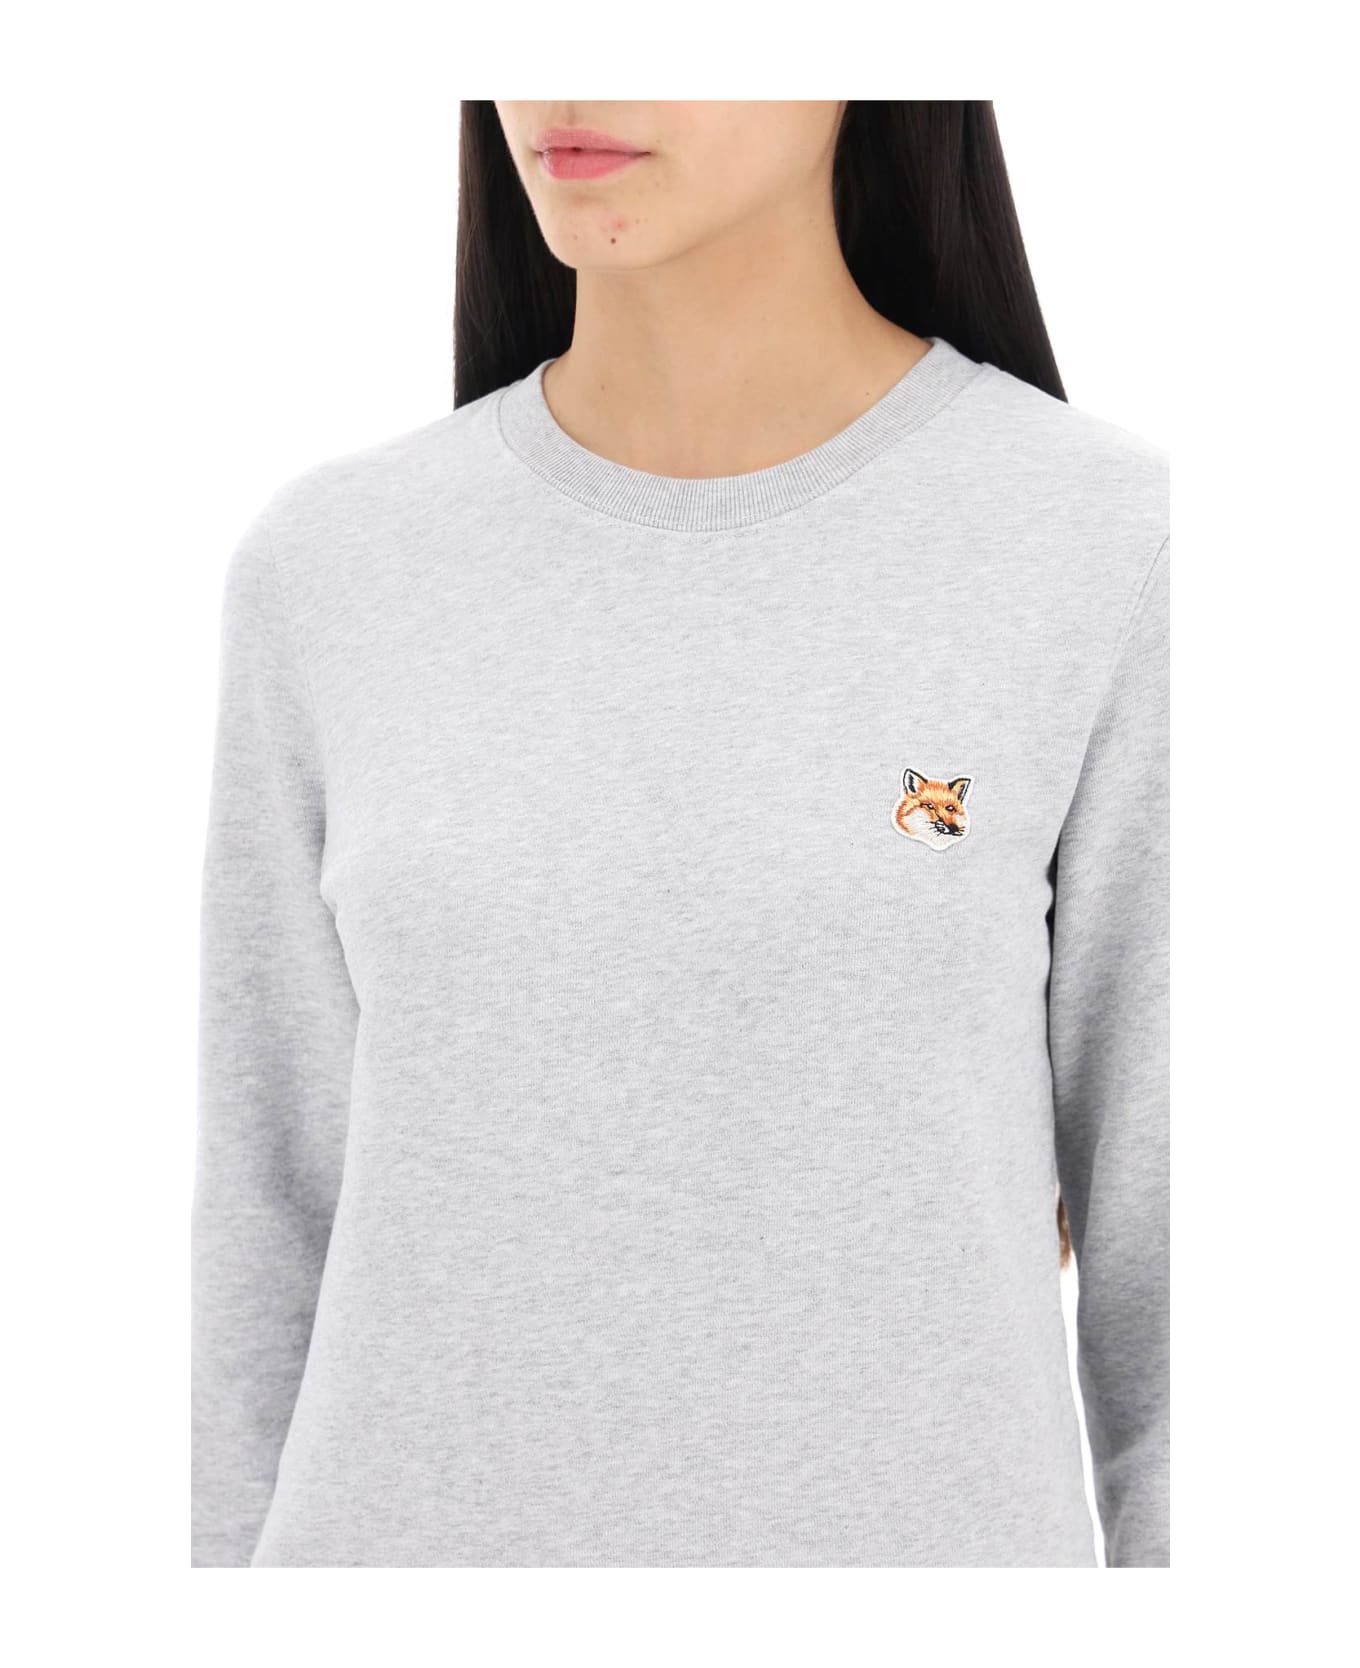 Maison Kitsuné Fox Head Regular Fit Sweatshirt - LIGHT GREY MELANGE (Grey)